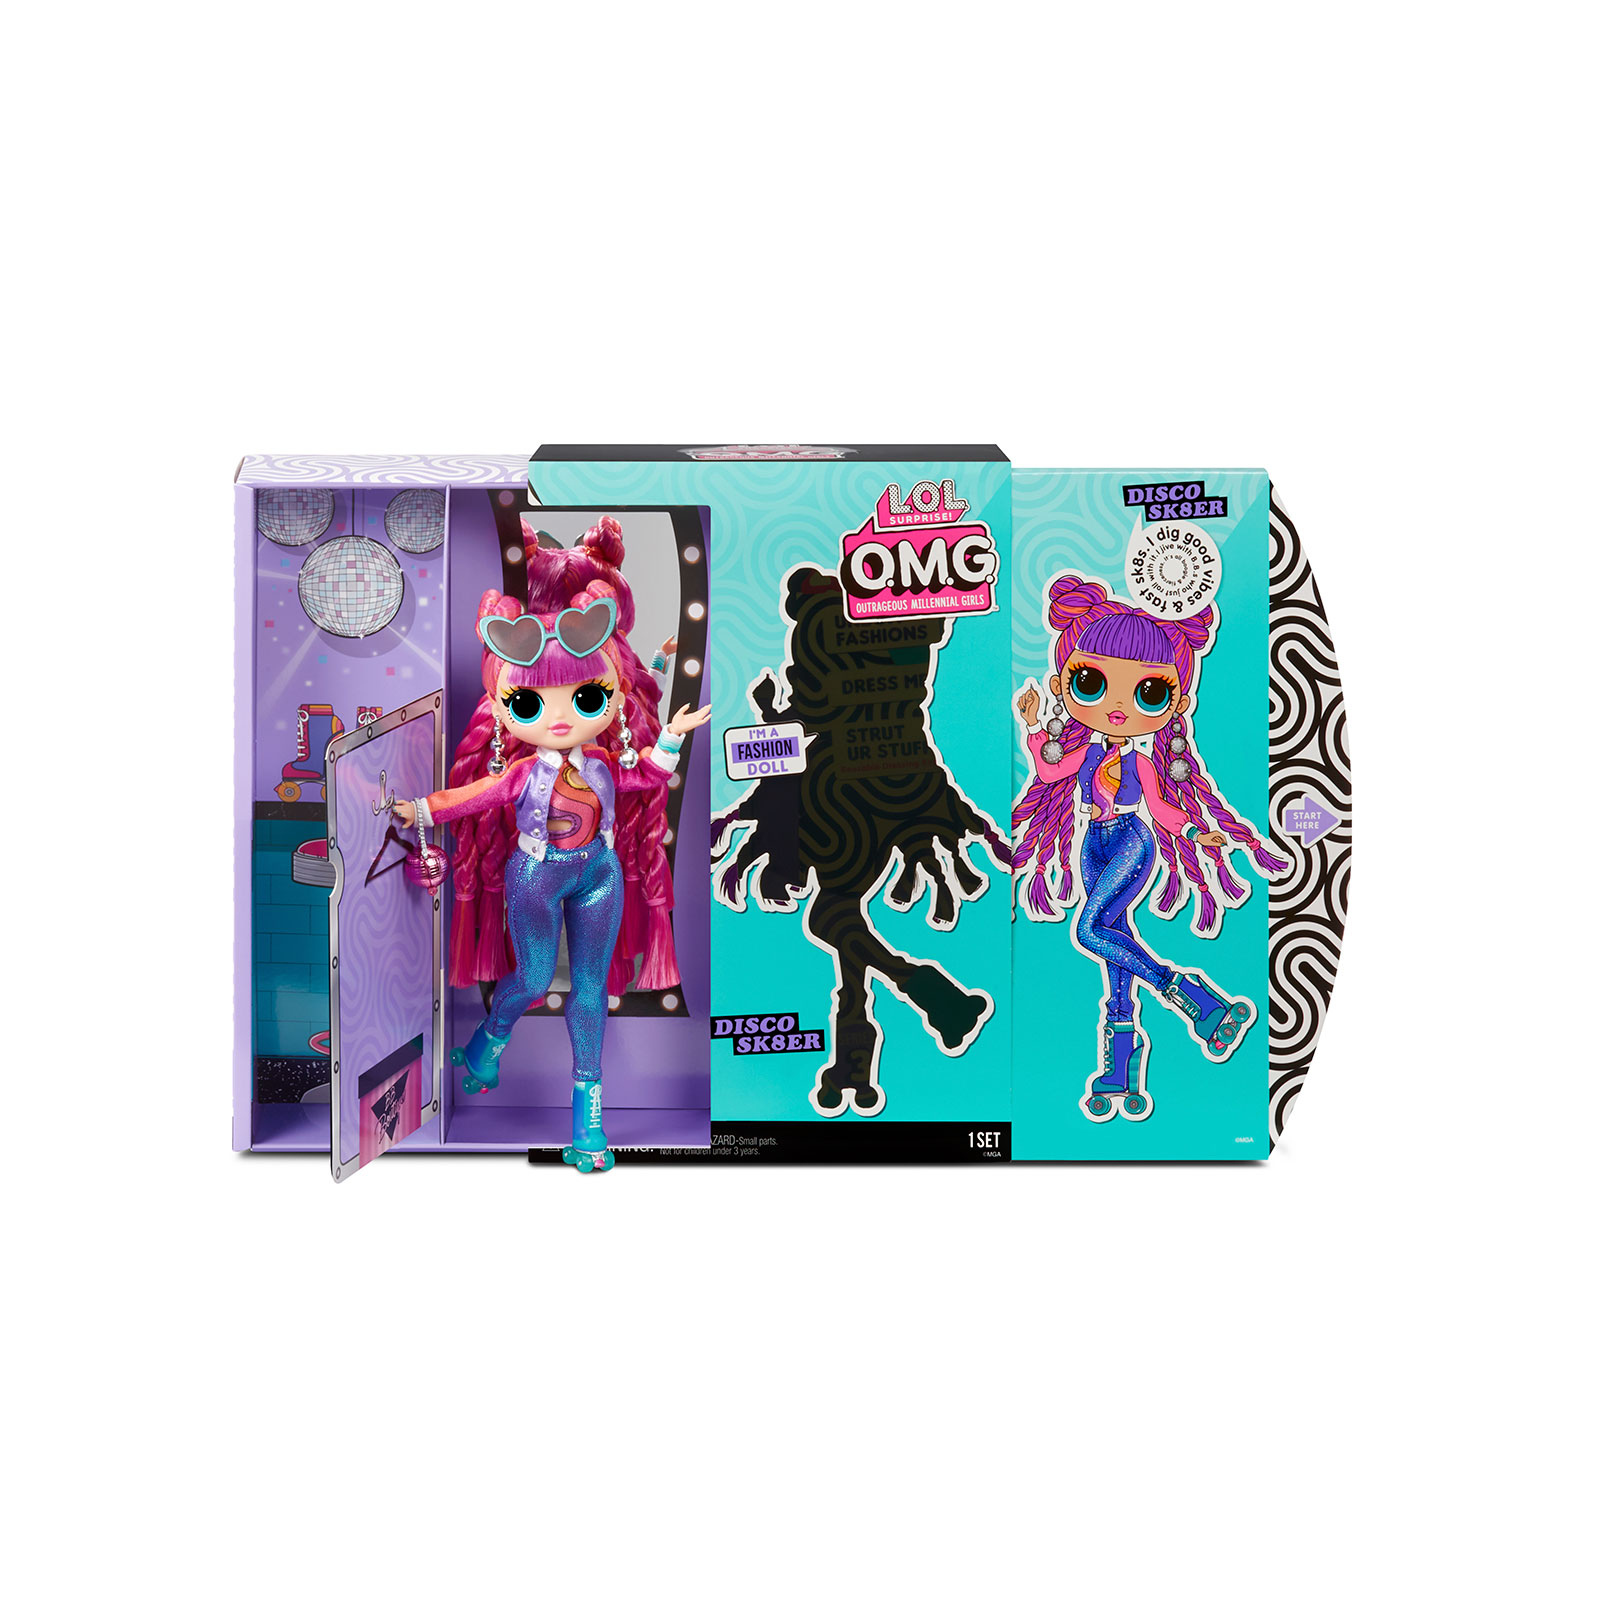 Кукла L.O.L. Surprise! O.M.G S3 - Диско-скейтер с аксессуарами (567196) изображение 6